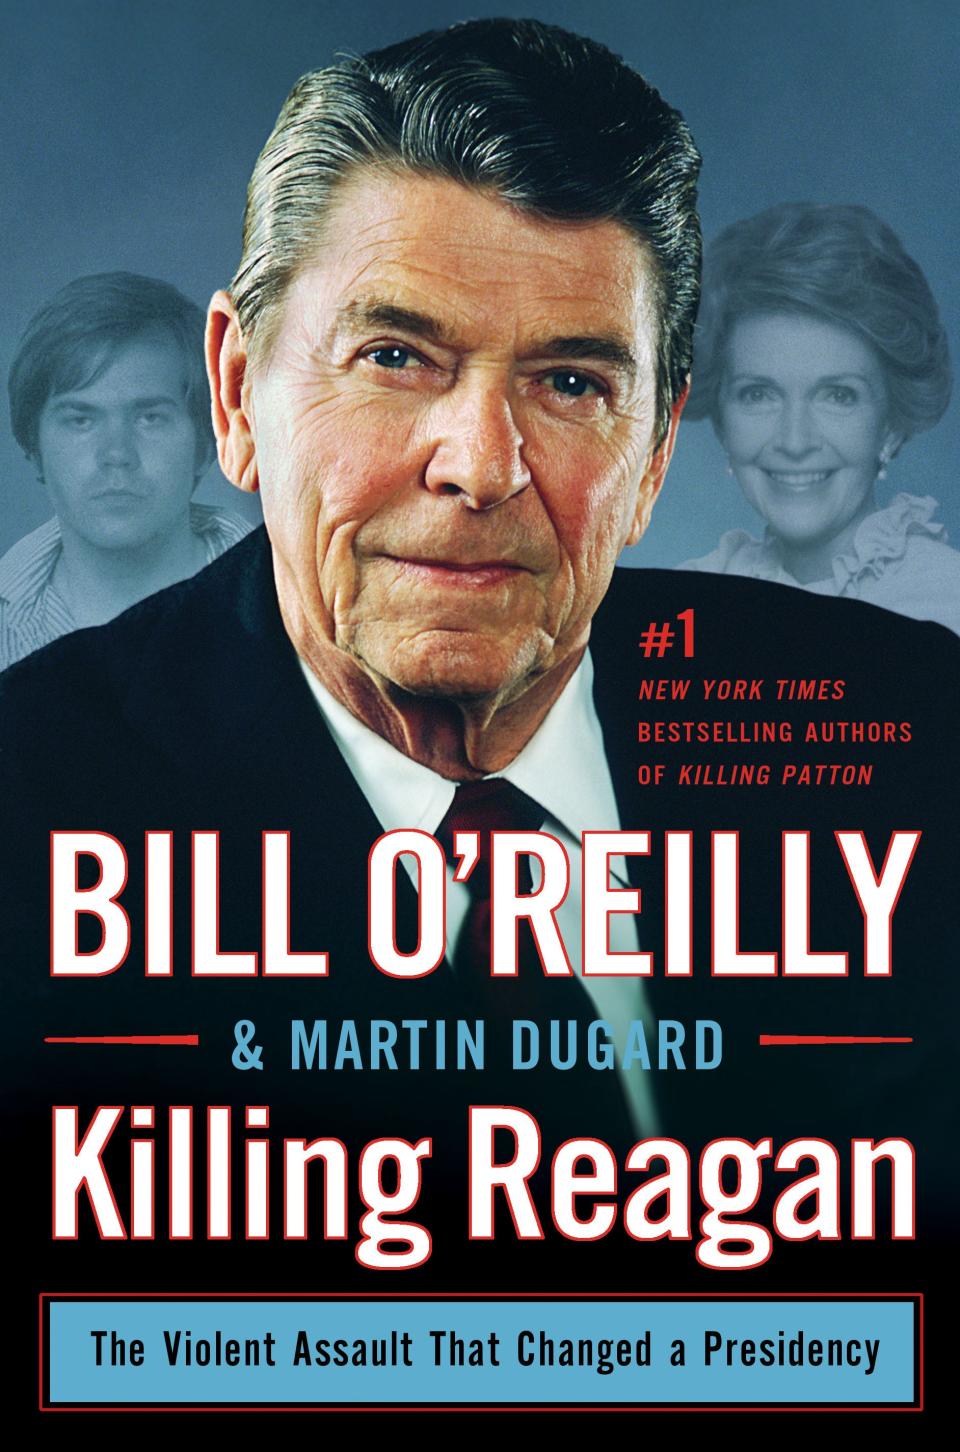 'Killing Reagan' by Bill O'Reilly and Martin Dugard